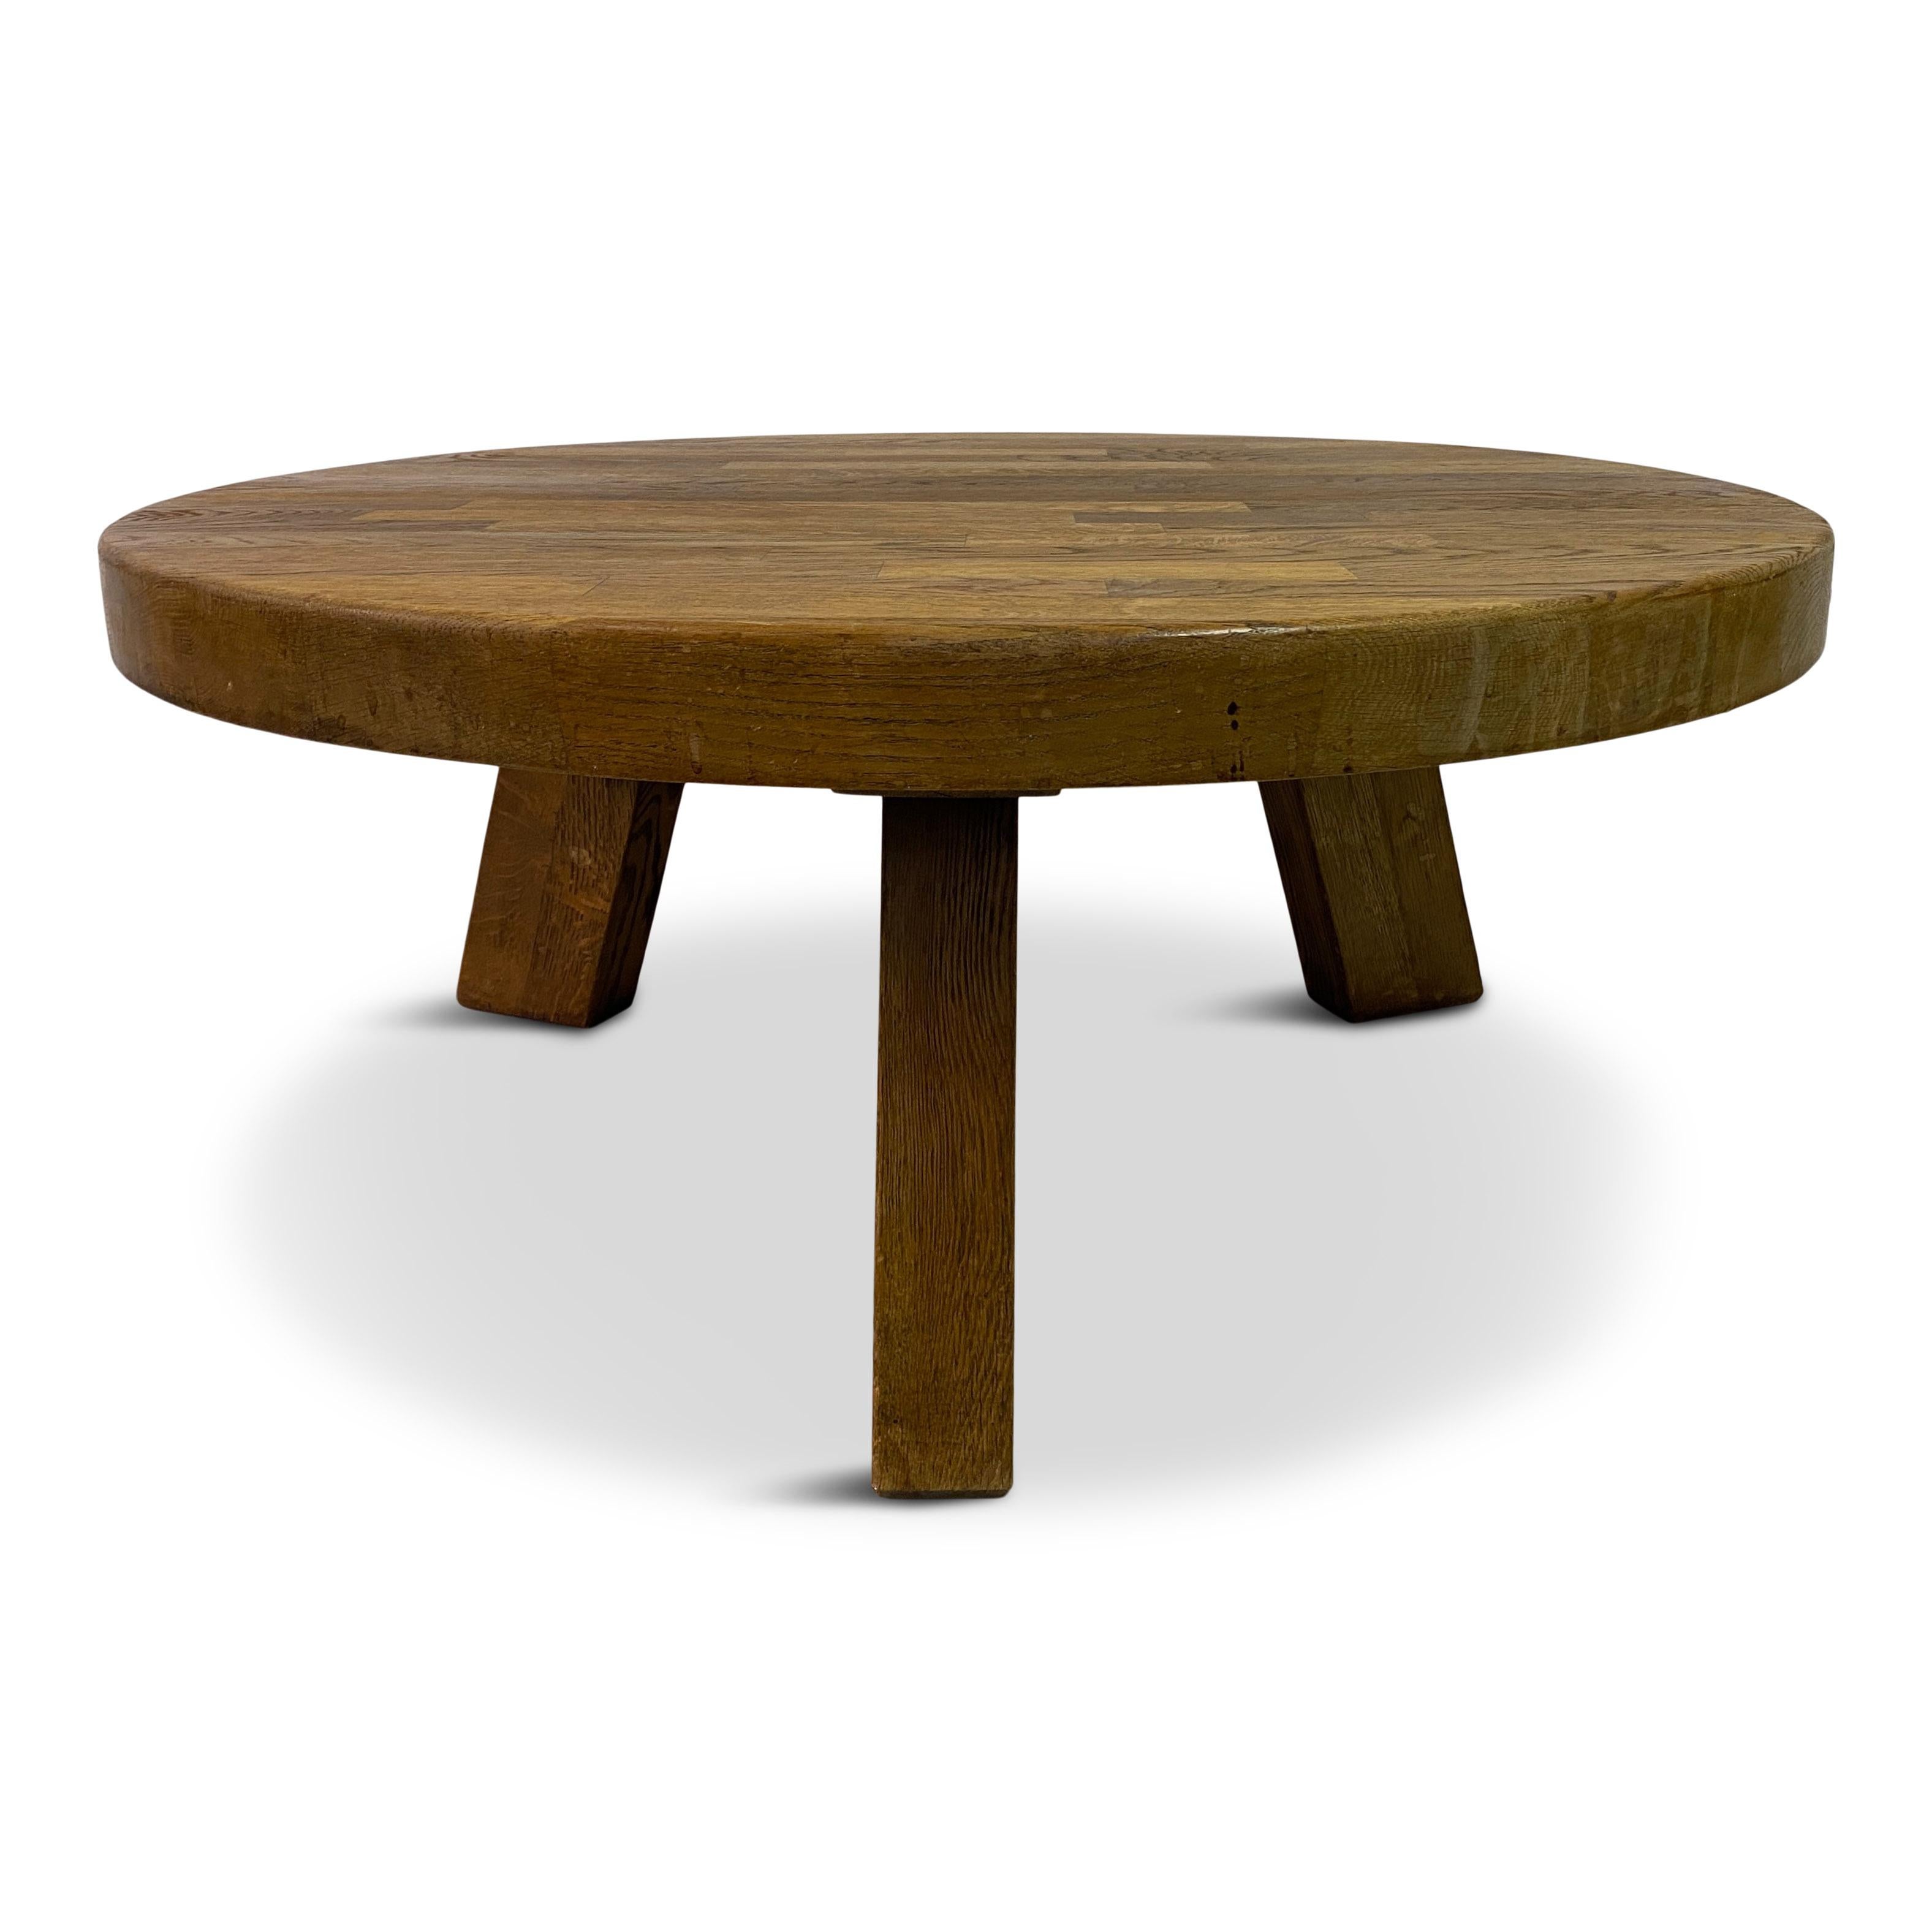 Round coffee table

Oak

Segmented top 

Thick oak legs

Flemish 1960s